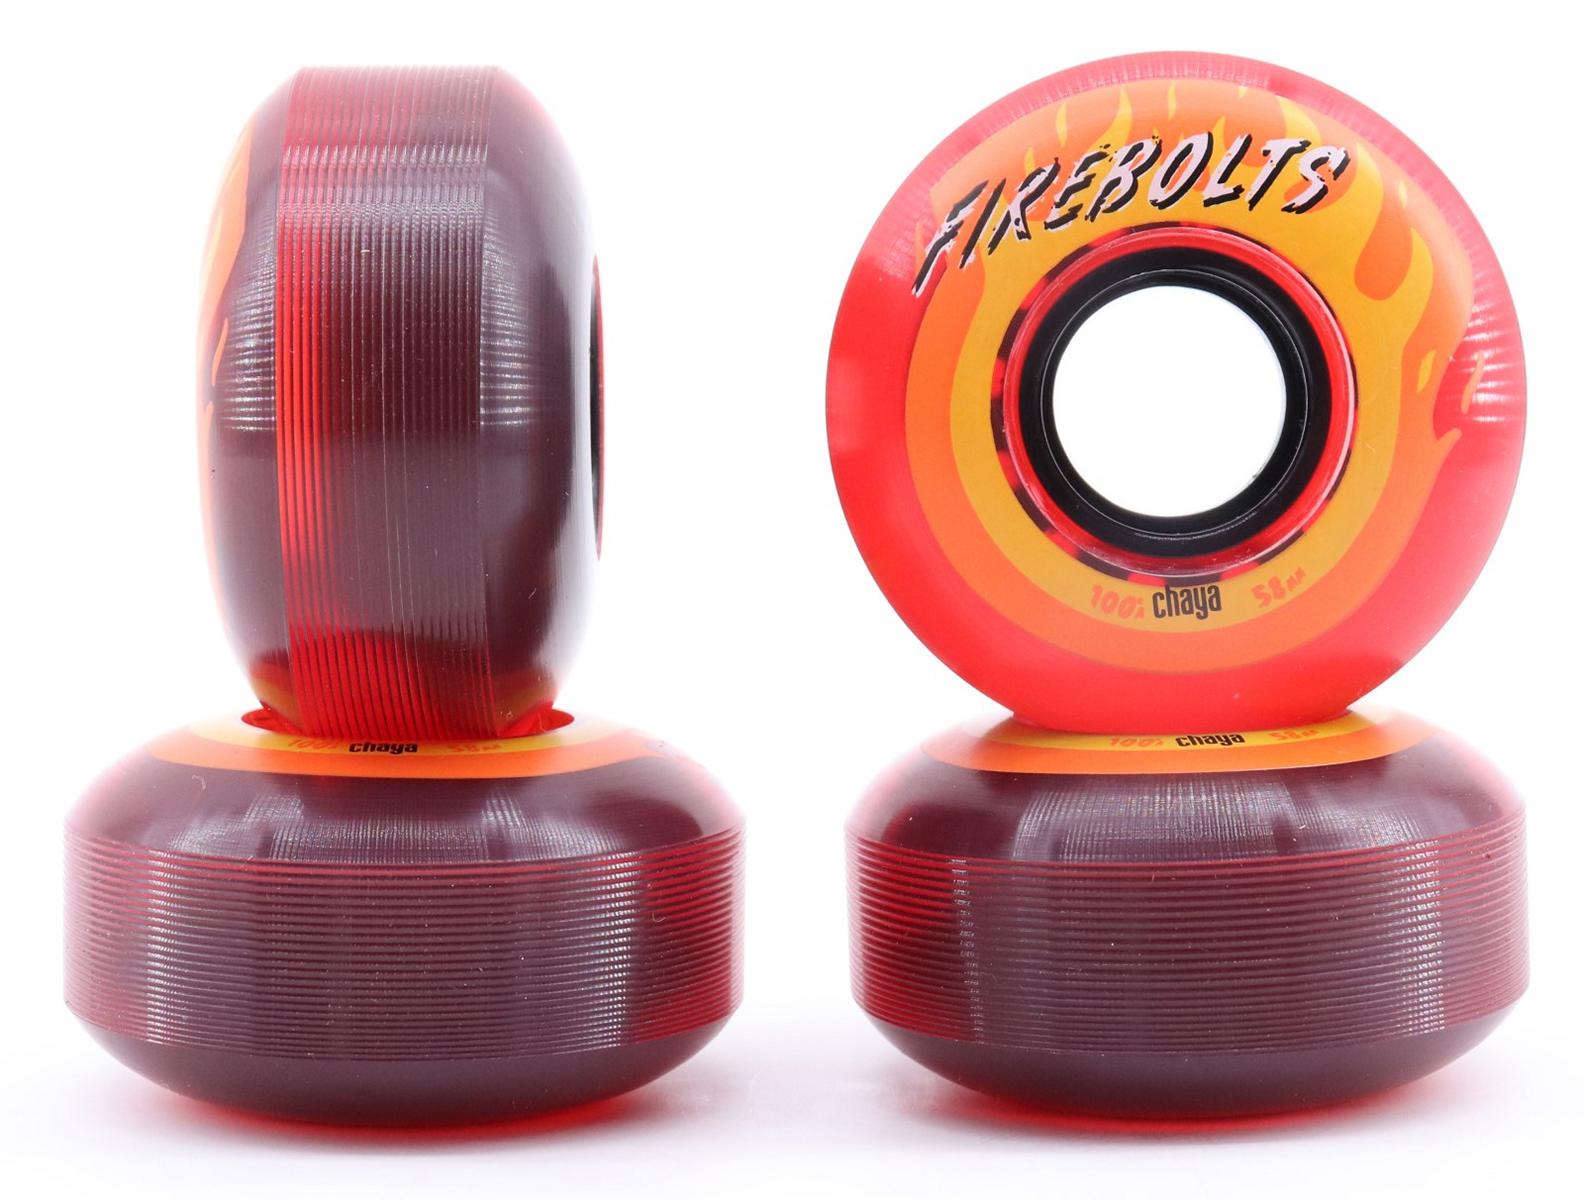 Chaya Firebolts Roller Skates - Wheels Red Translucent